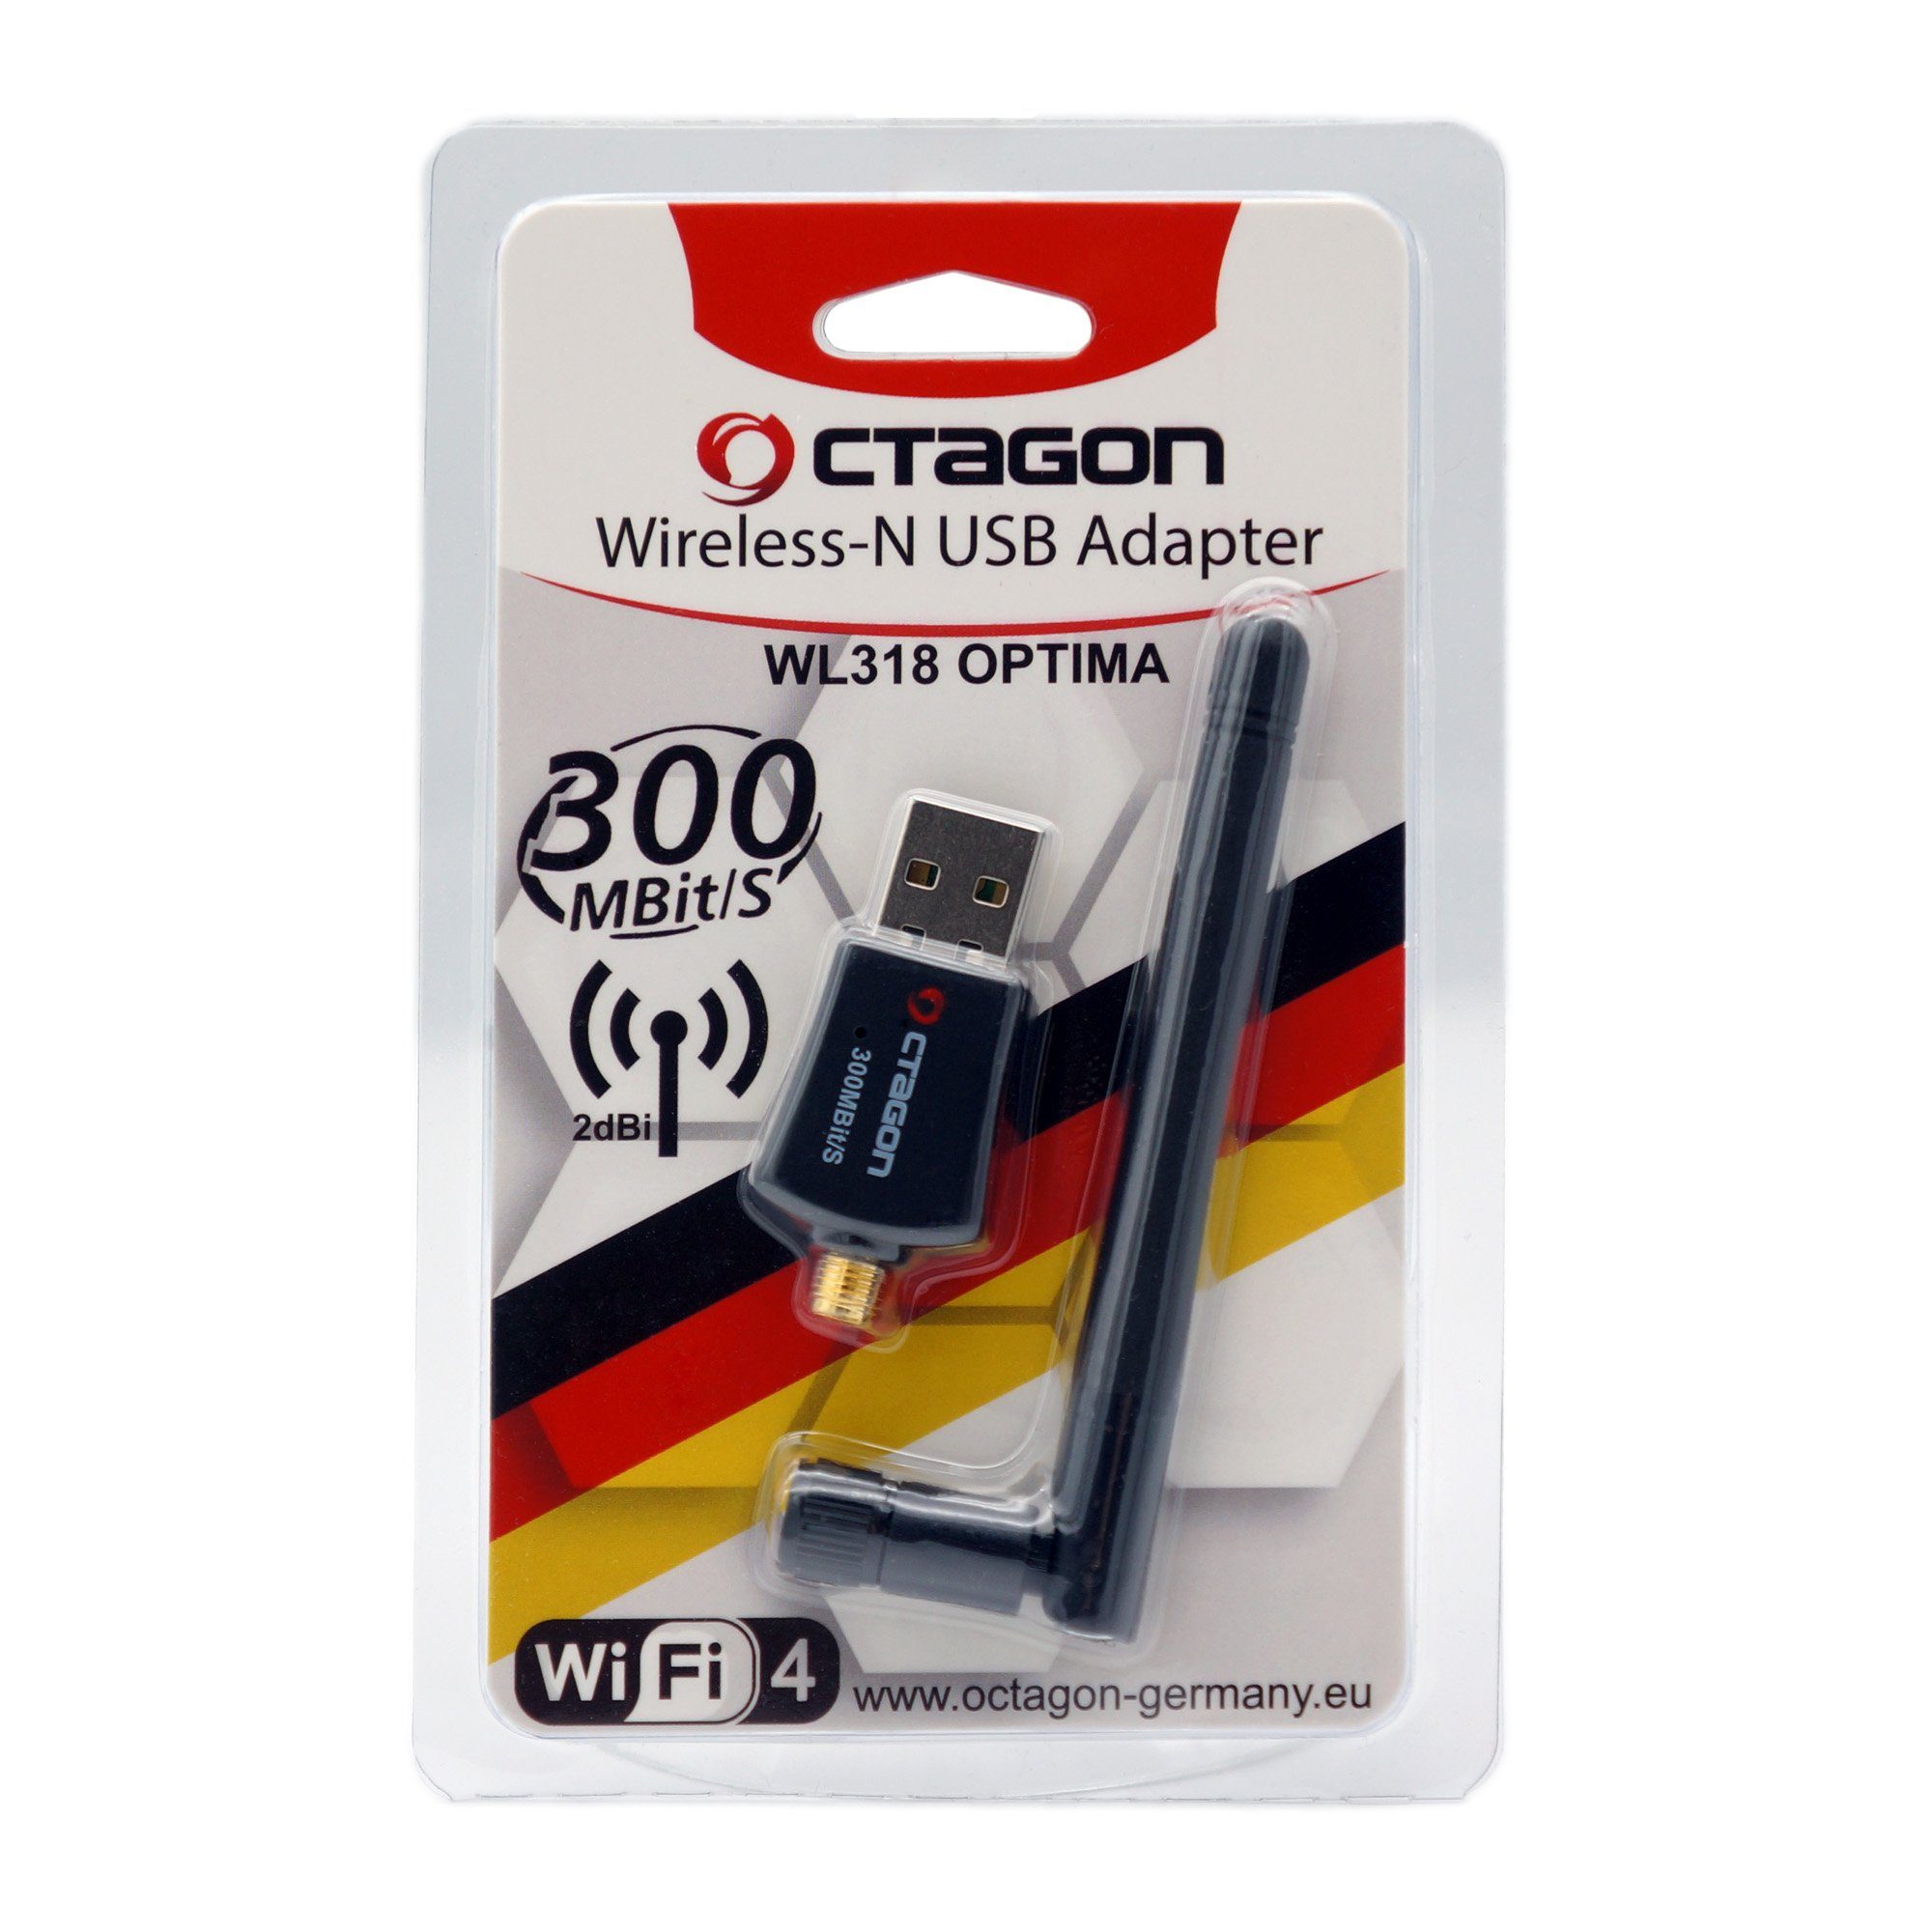 WLAN Antenne OCTAGON USB Adapter Mbit/s (WiFi, 2.0 Blister +2dBi SAT-Receiver WL318 300